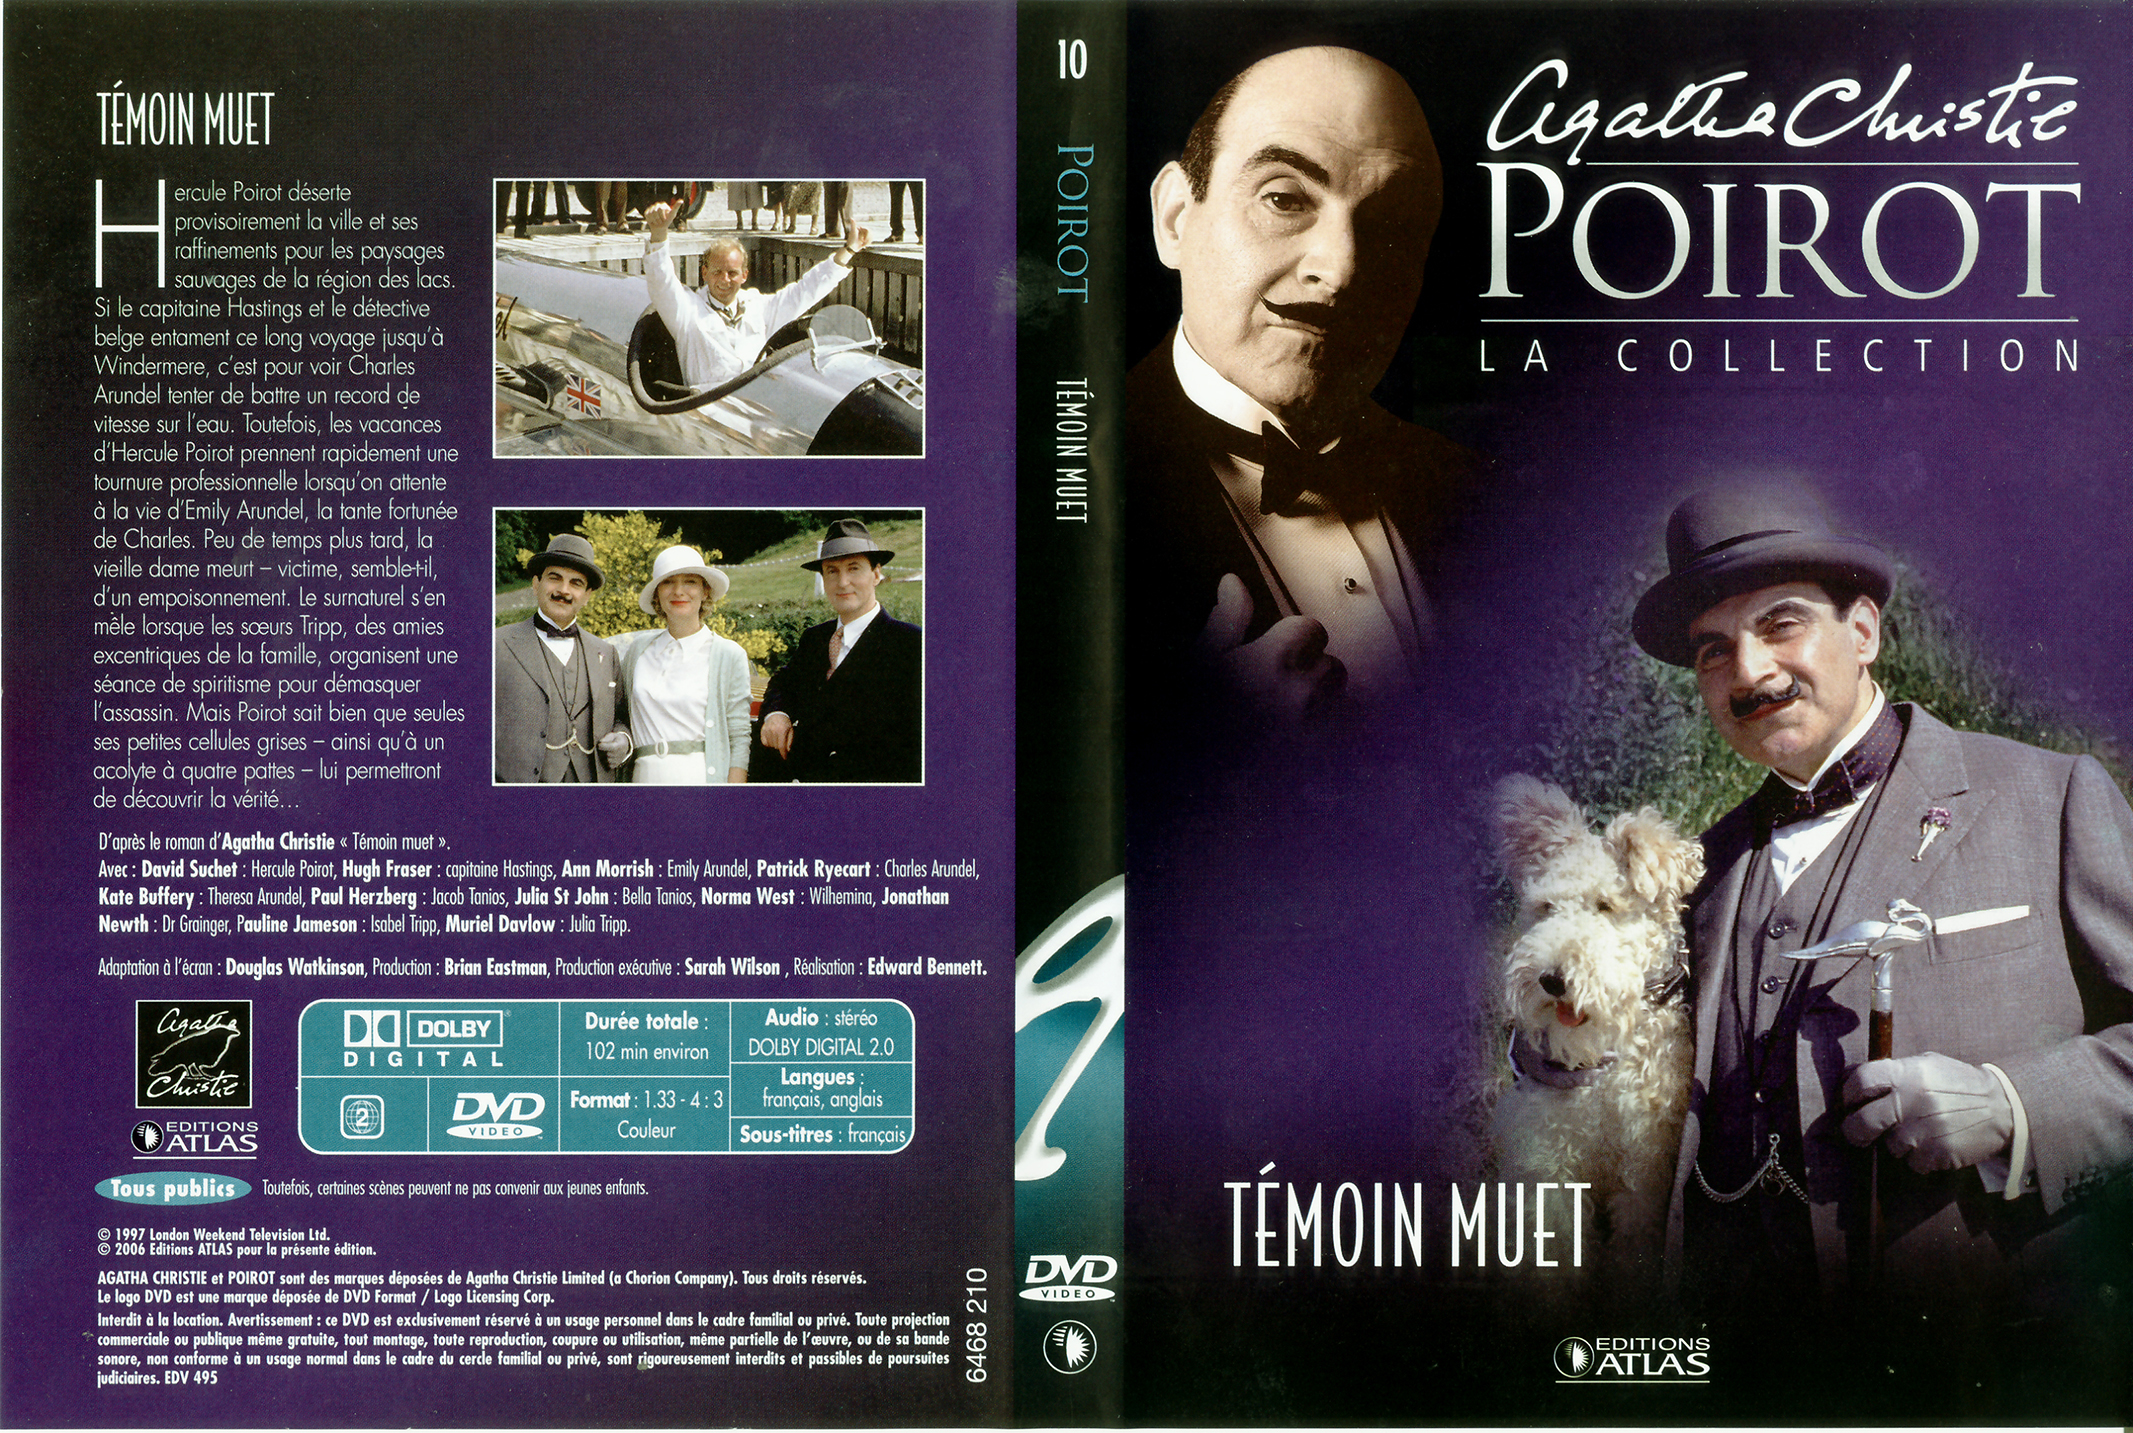 Jaquette DVD Hercule Poirot vol 10